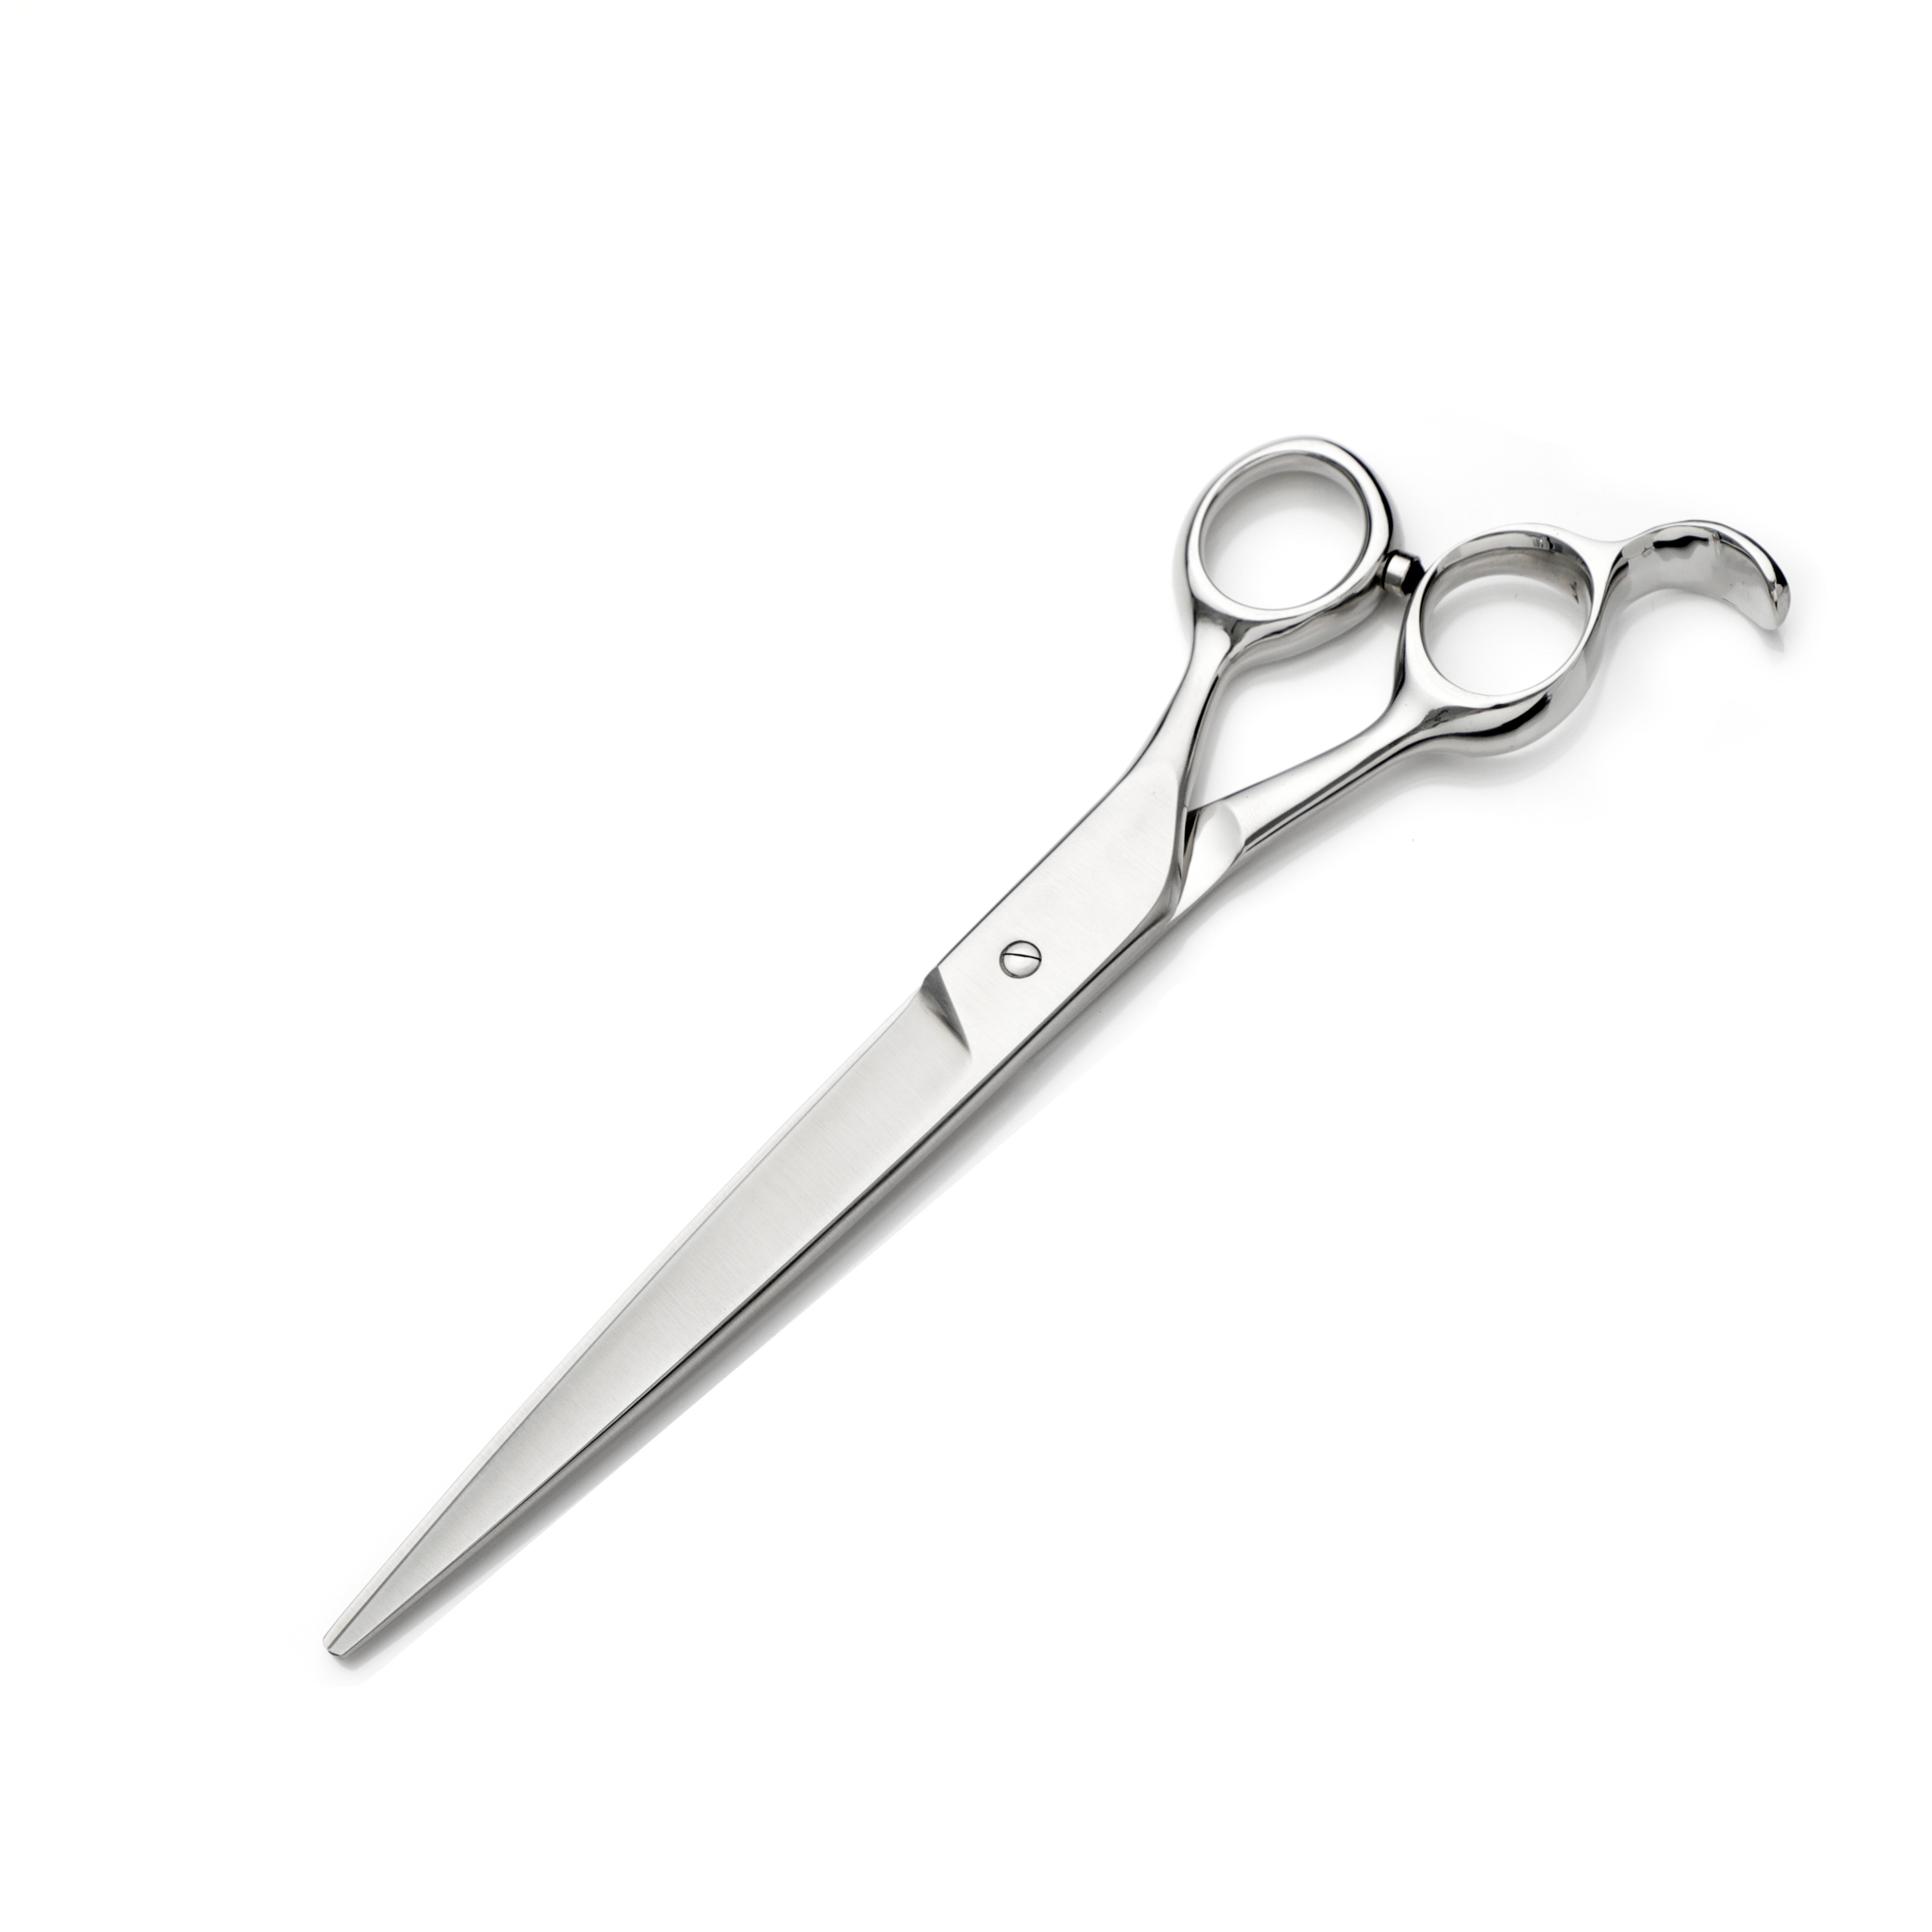 Features of 7.0 inch pet scissors